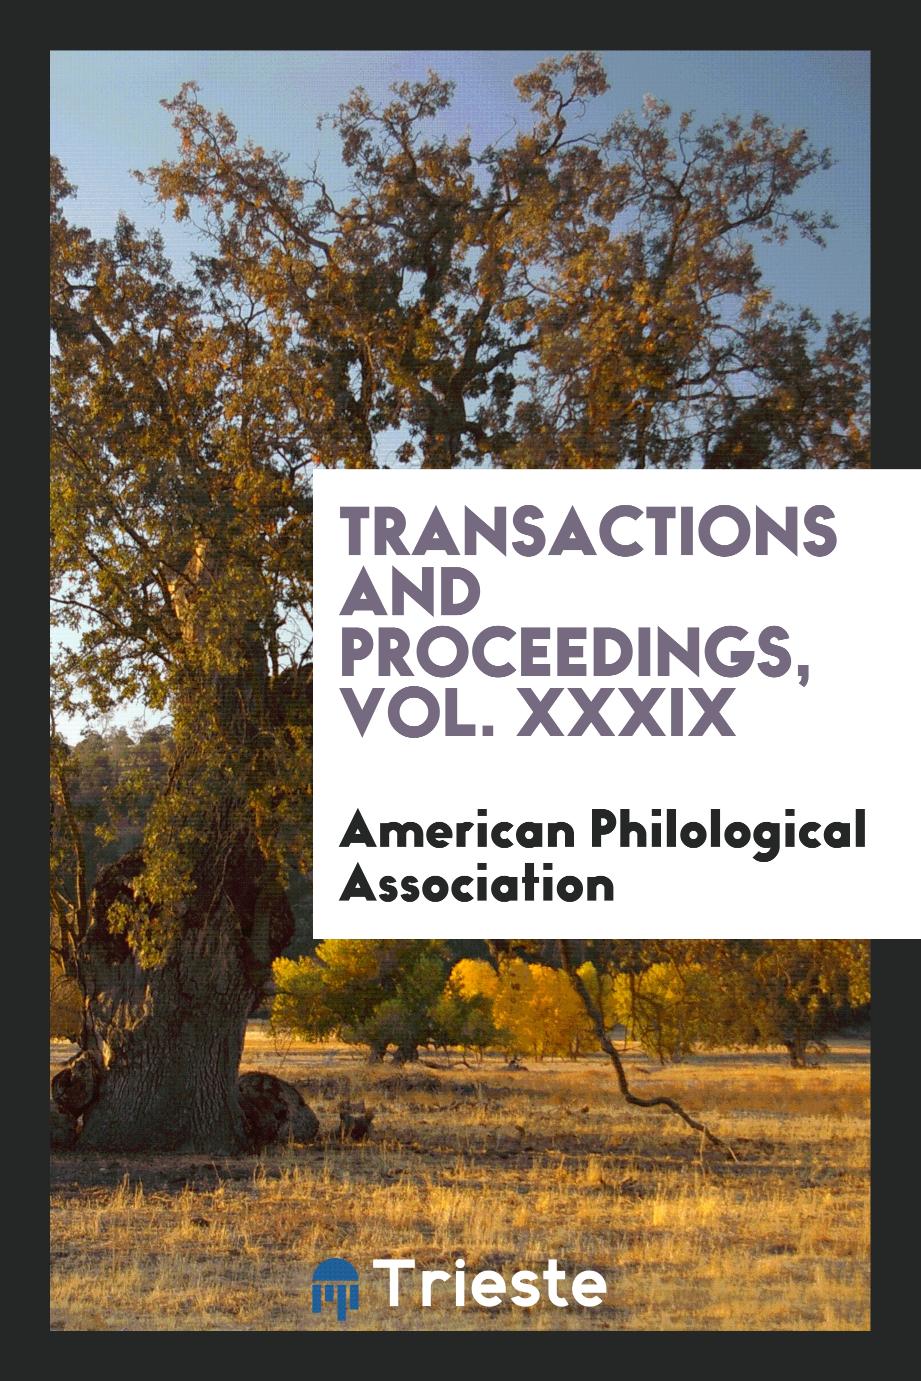 Transactions and proceedings, Vol. XXXIX